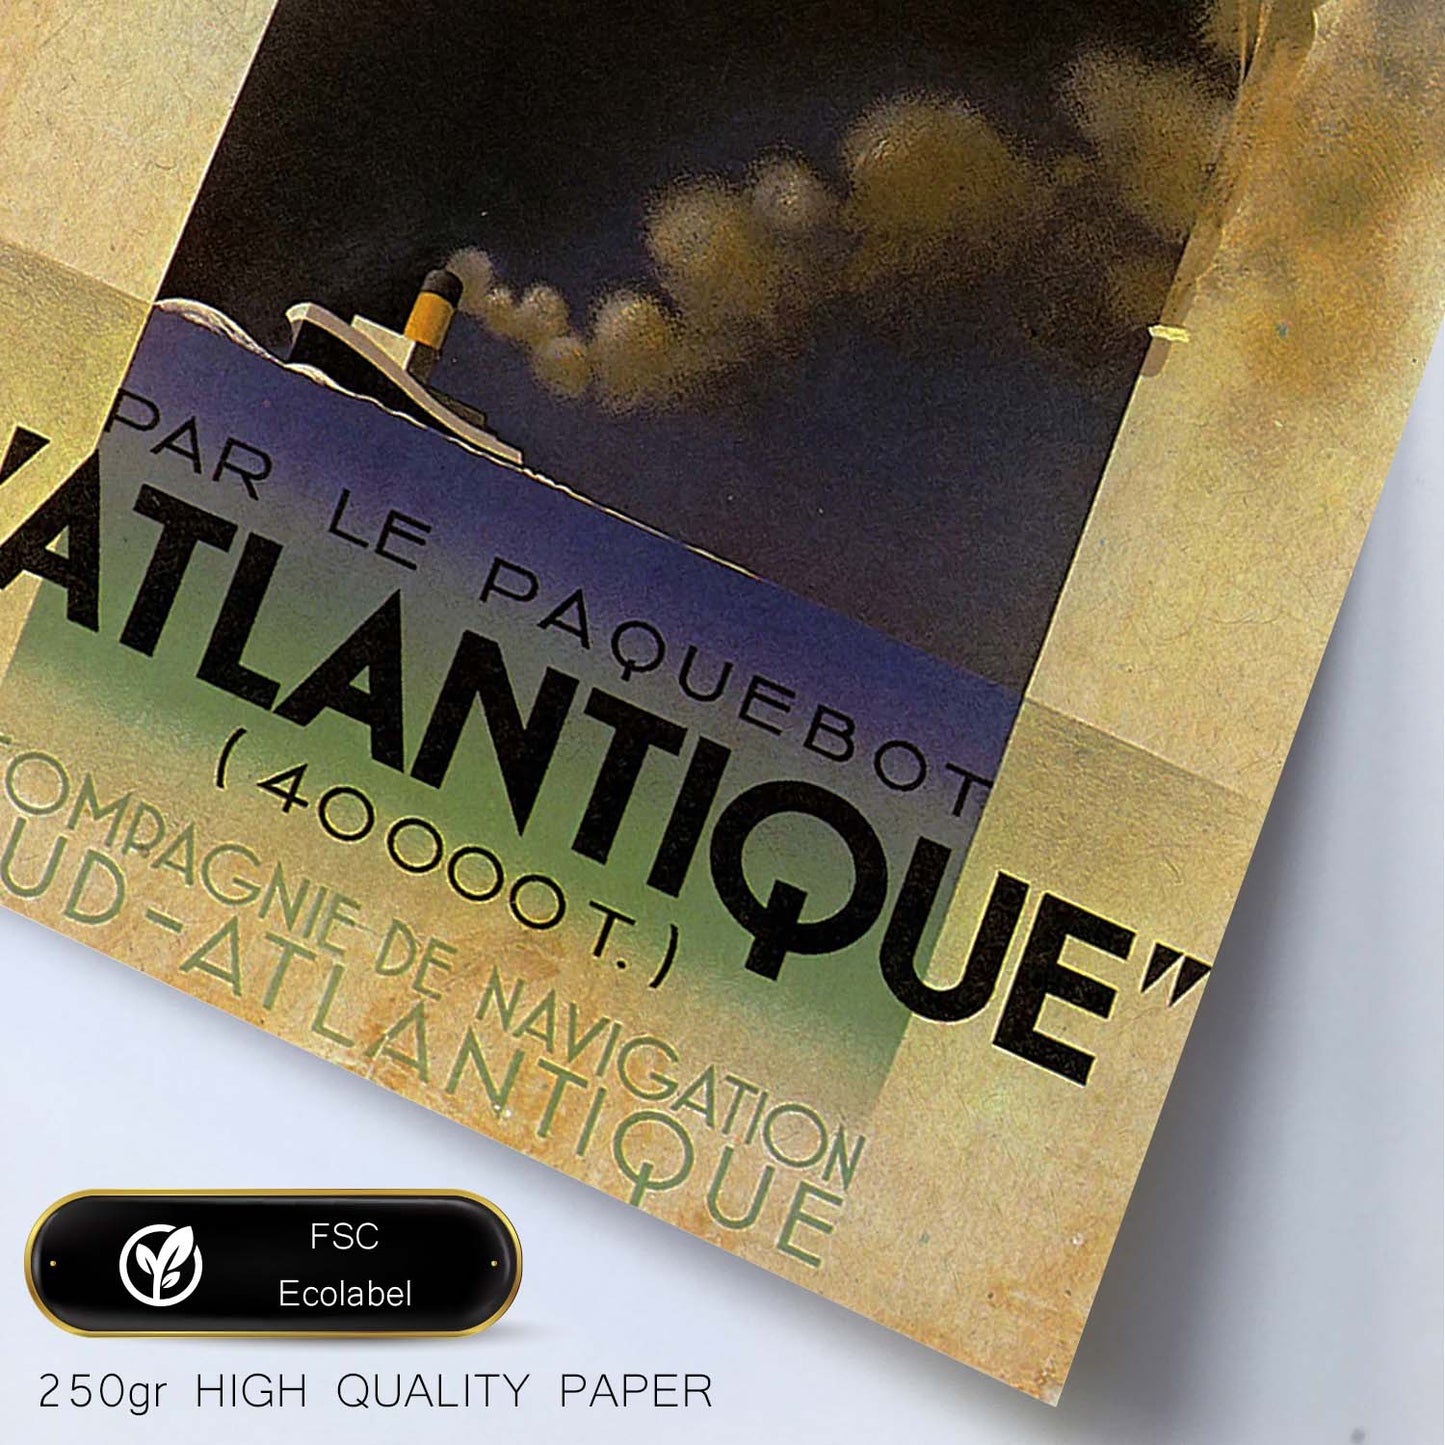 Poster vintage. Cartel vintage del trasatlántico L'Atlantique, 1931. A.M. Cassandre.-Artwork-Nacnic-Nacnic Estudio SL